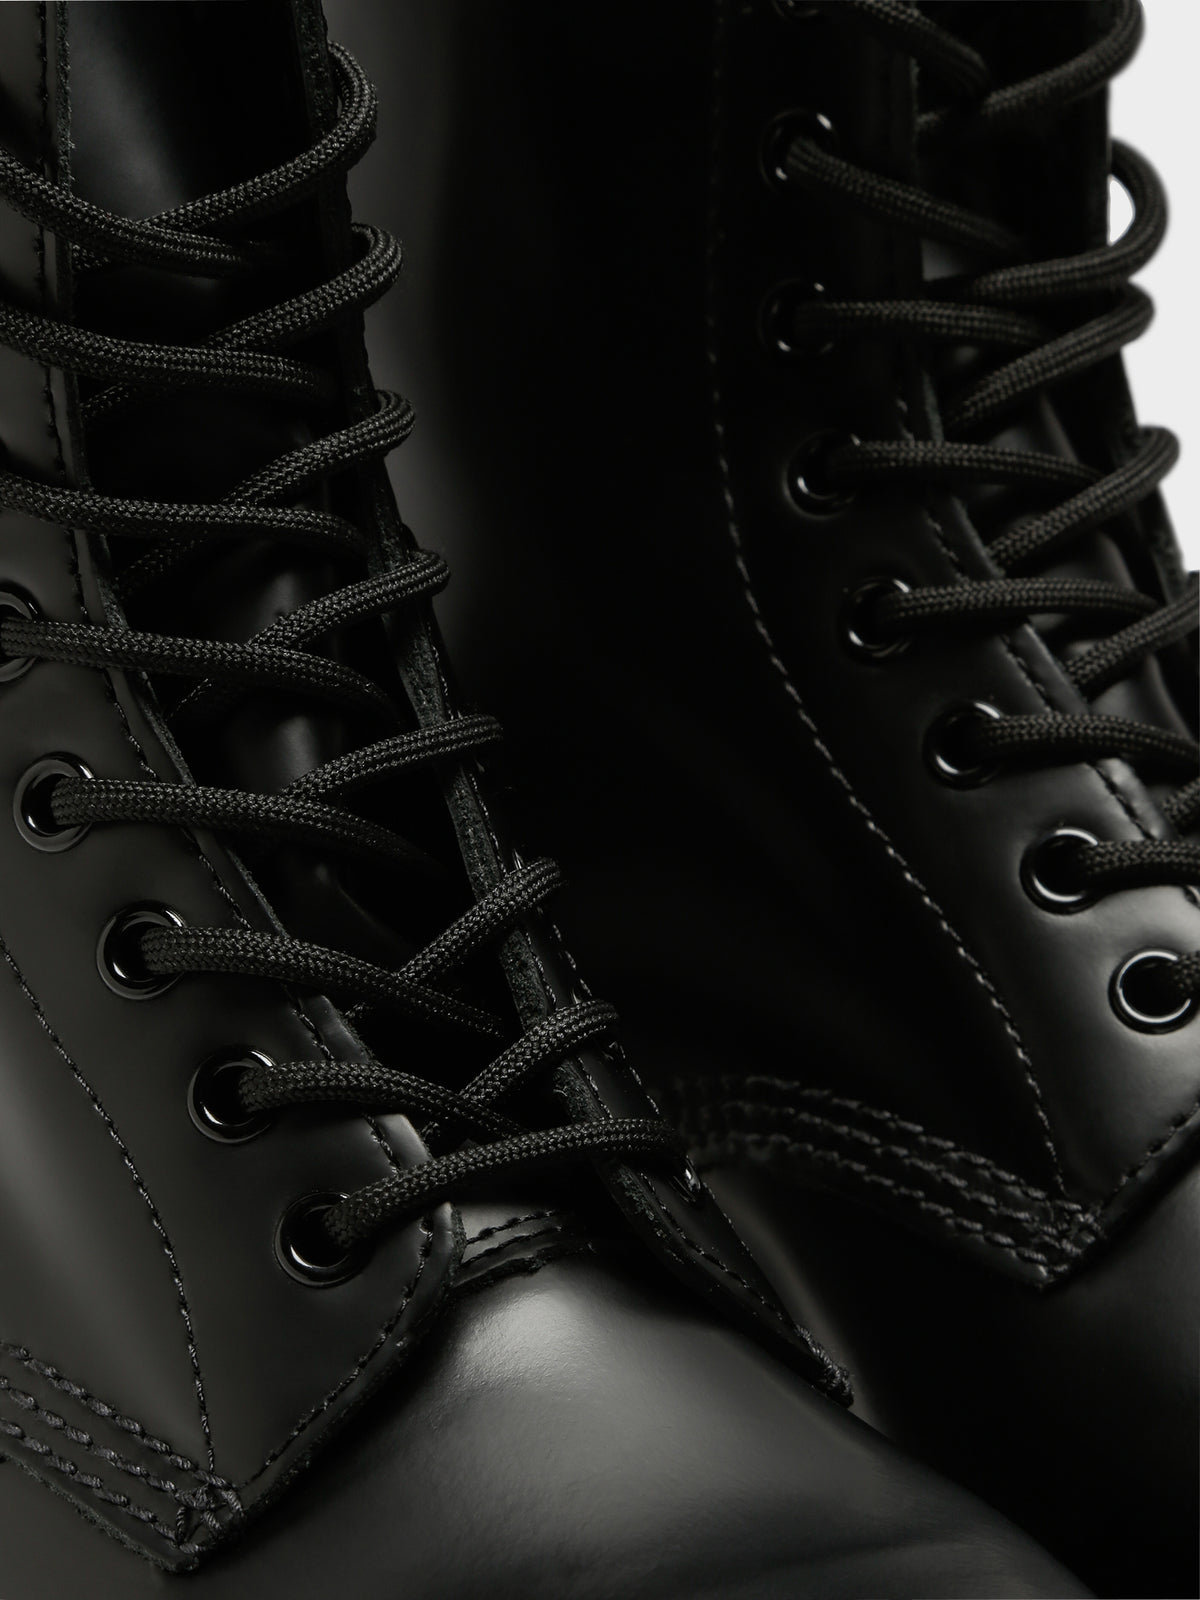 Unisex 1460 Bex Boots in Black